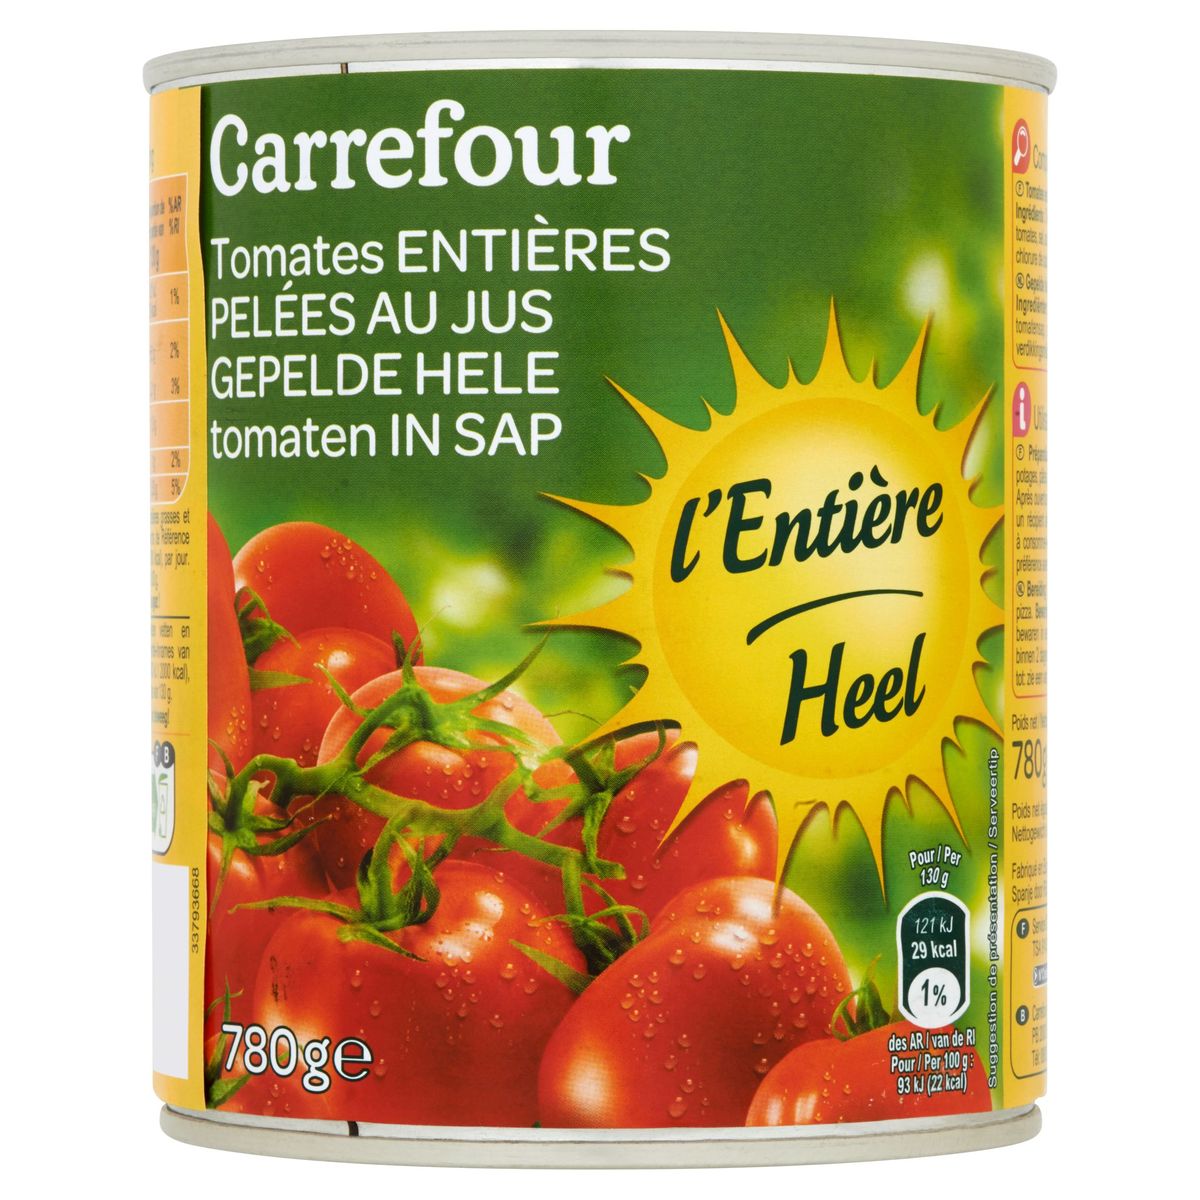 Carrefour Gepelde Hele Tomaten in Sap 780 g